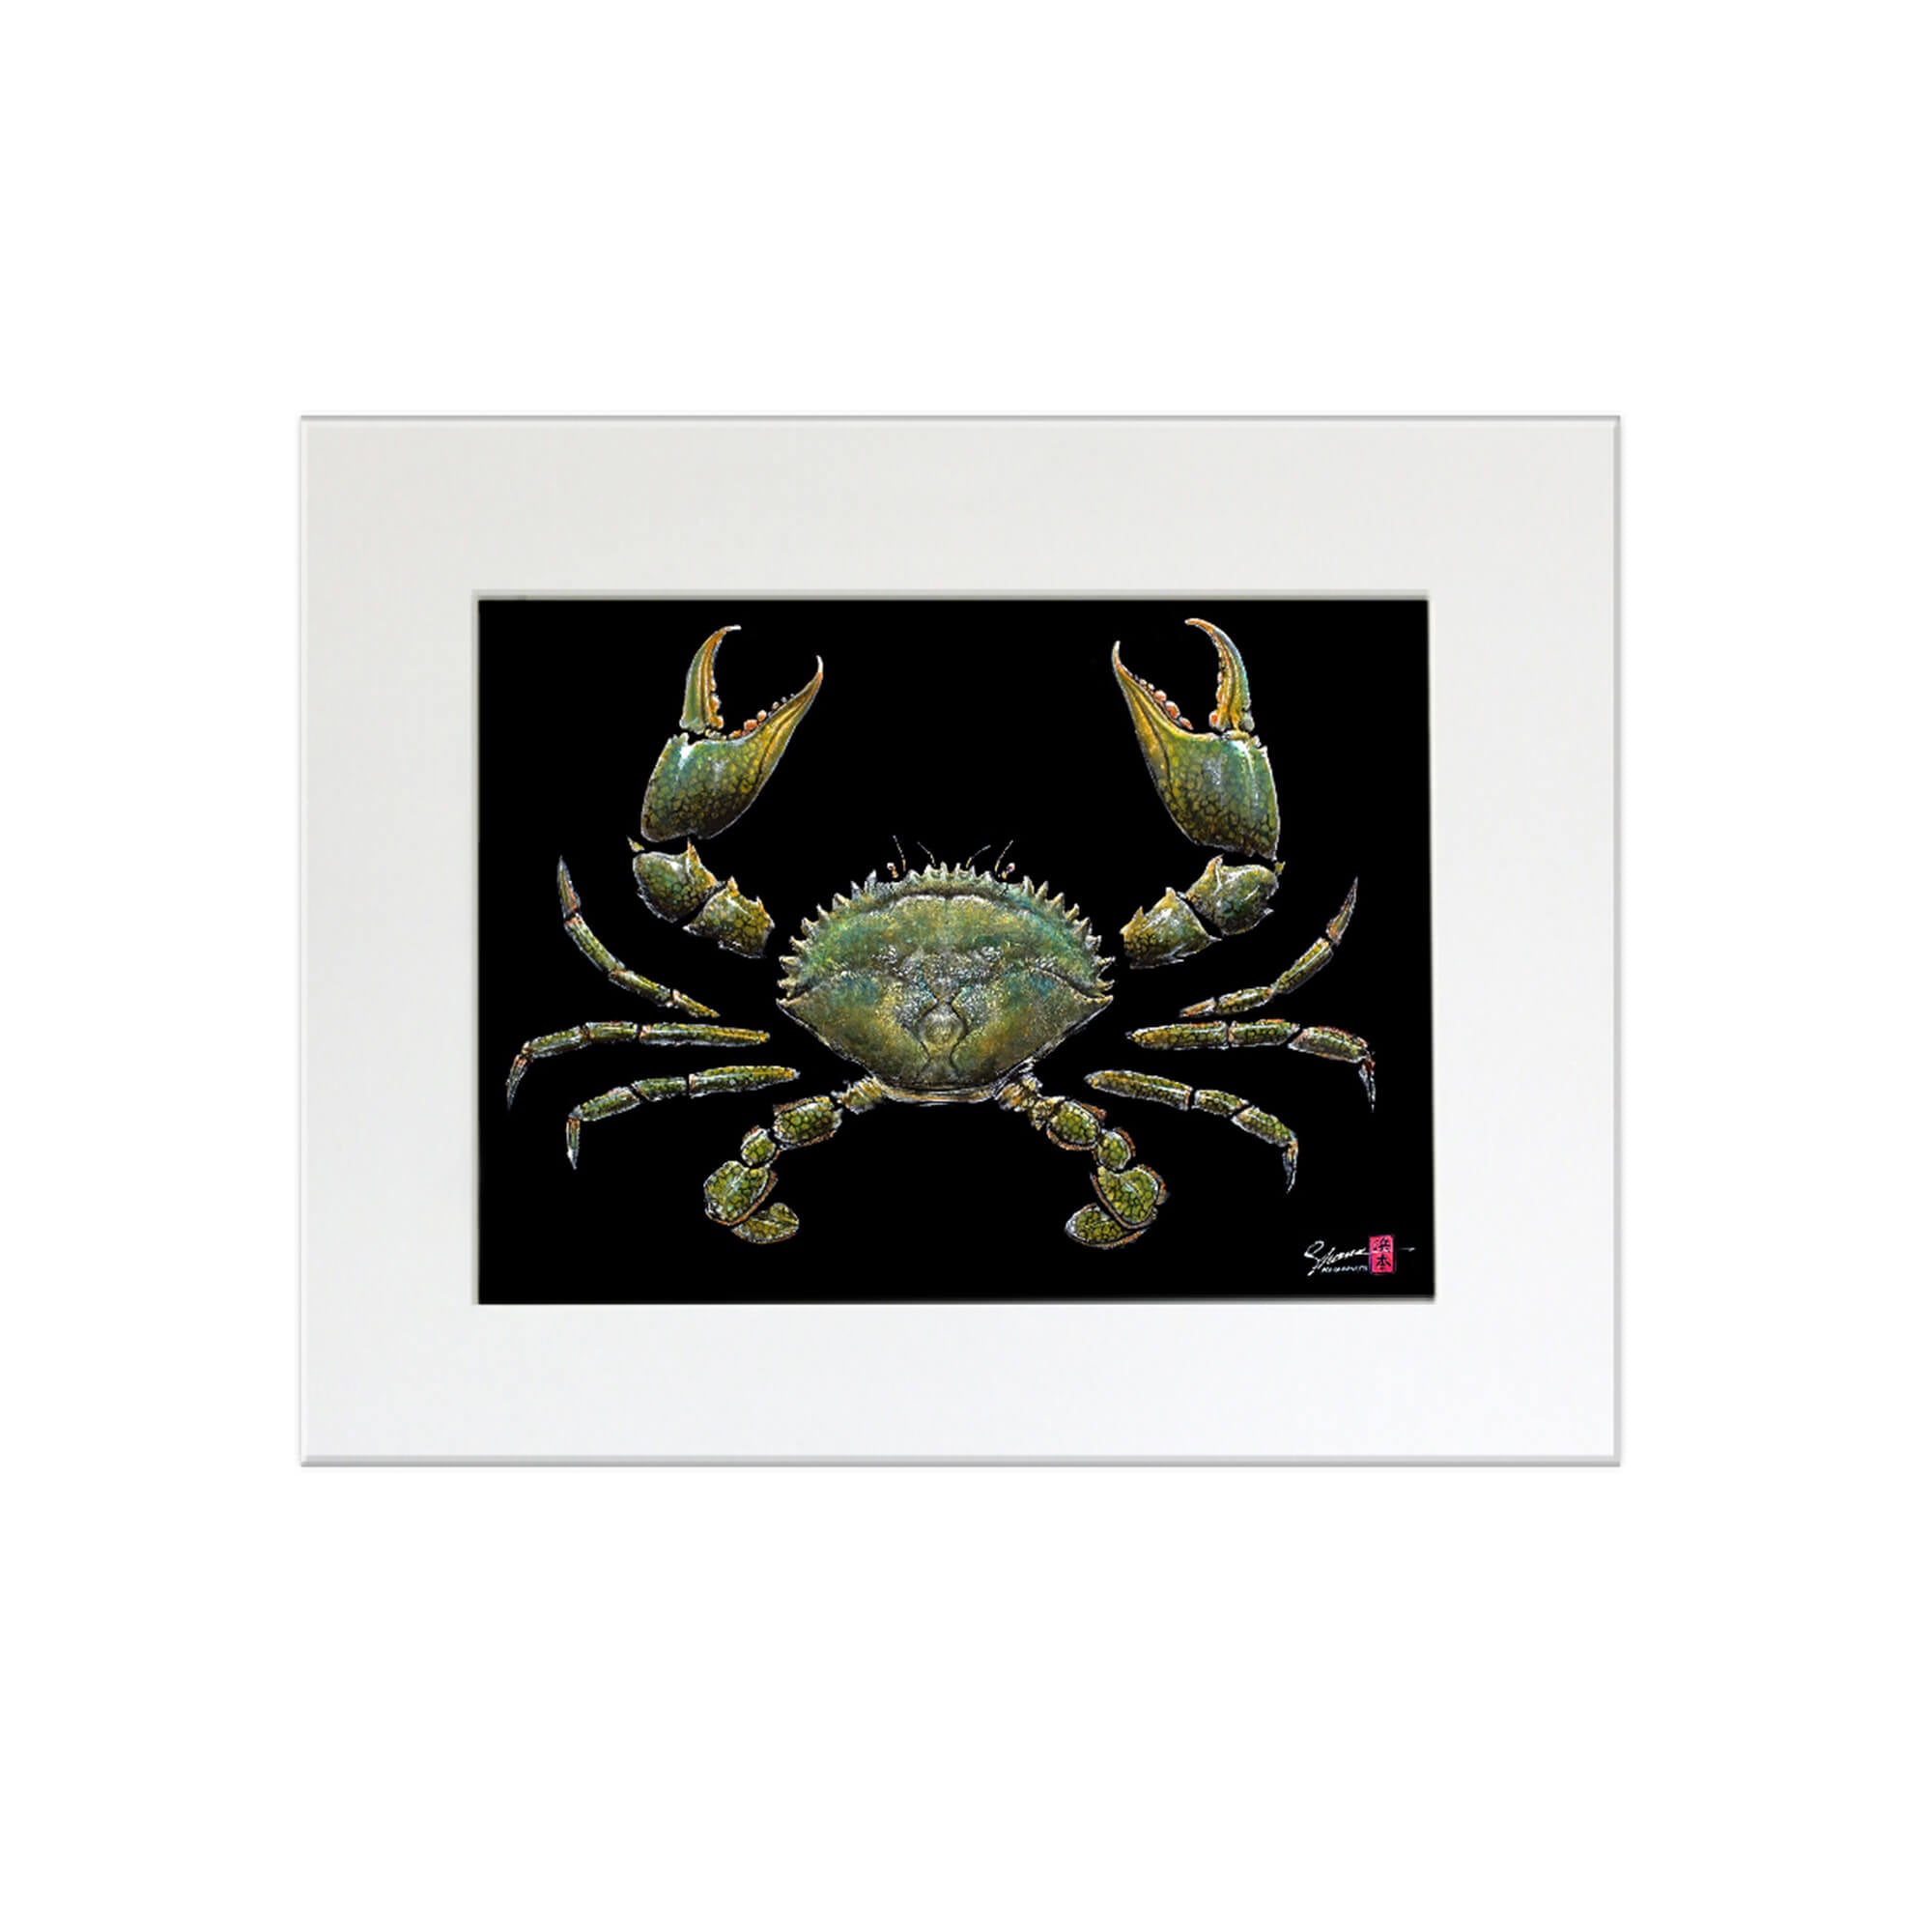 Matted print of Samoan Crab in black frame by Hawaii gyotaku artist Shane Hamamoto